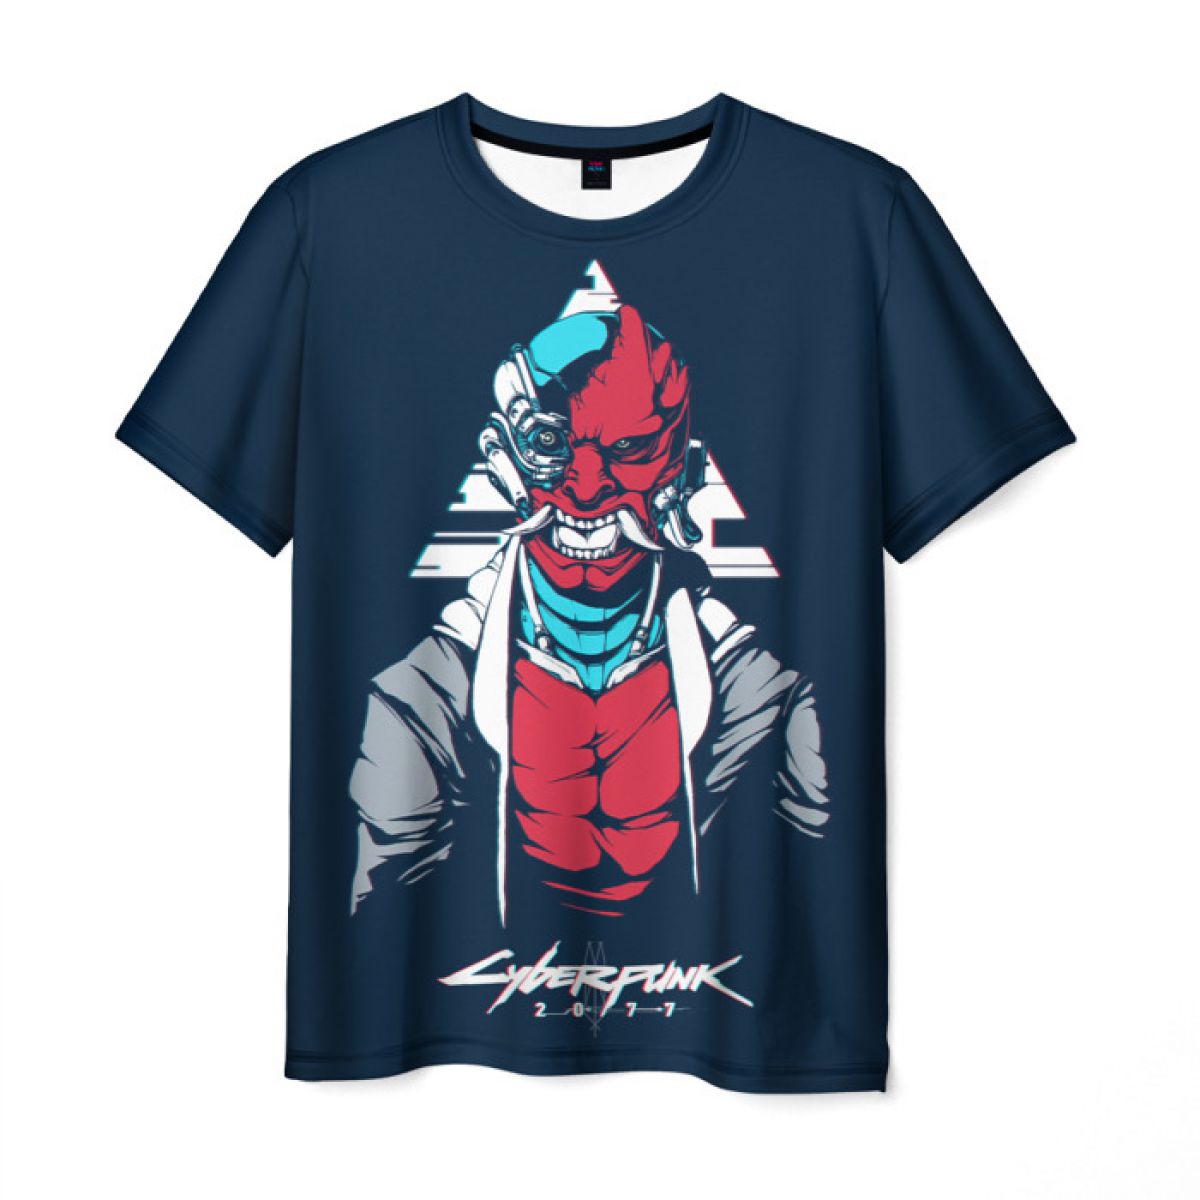 Cyberpunk samurai t shirt фото 28